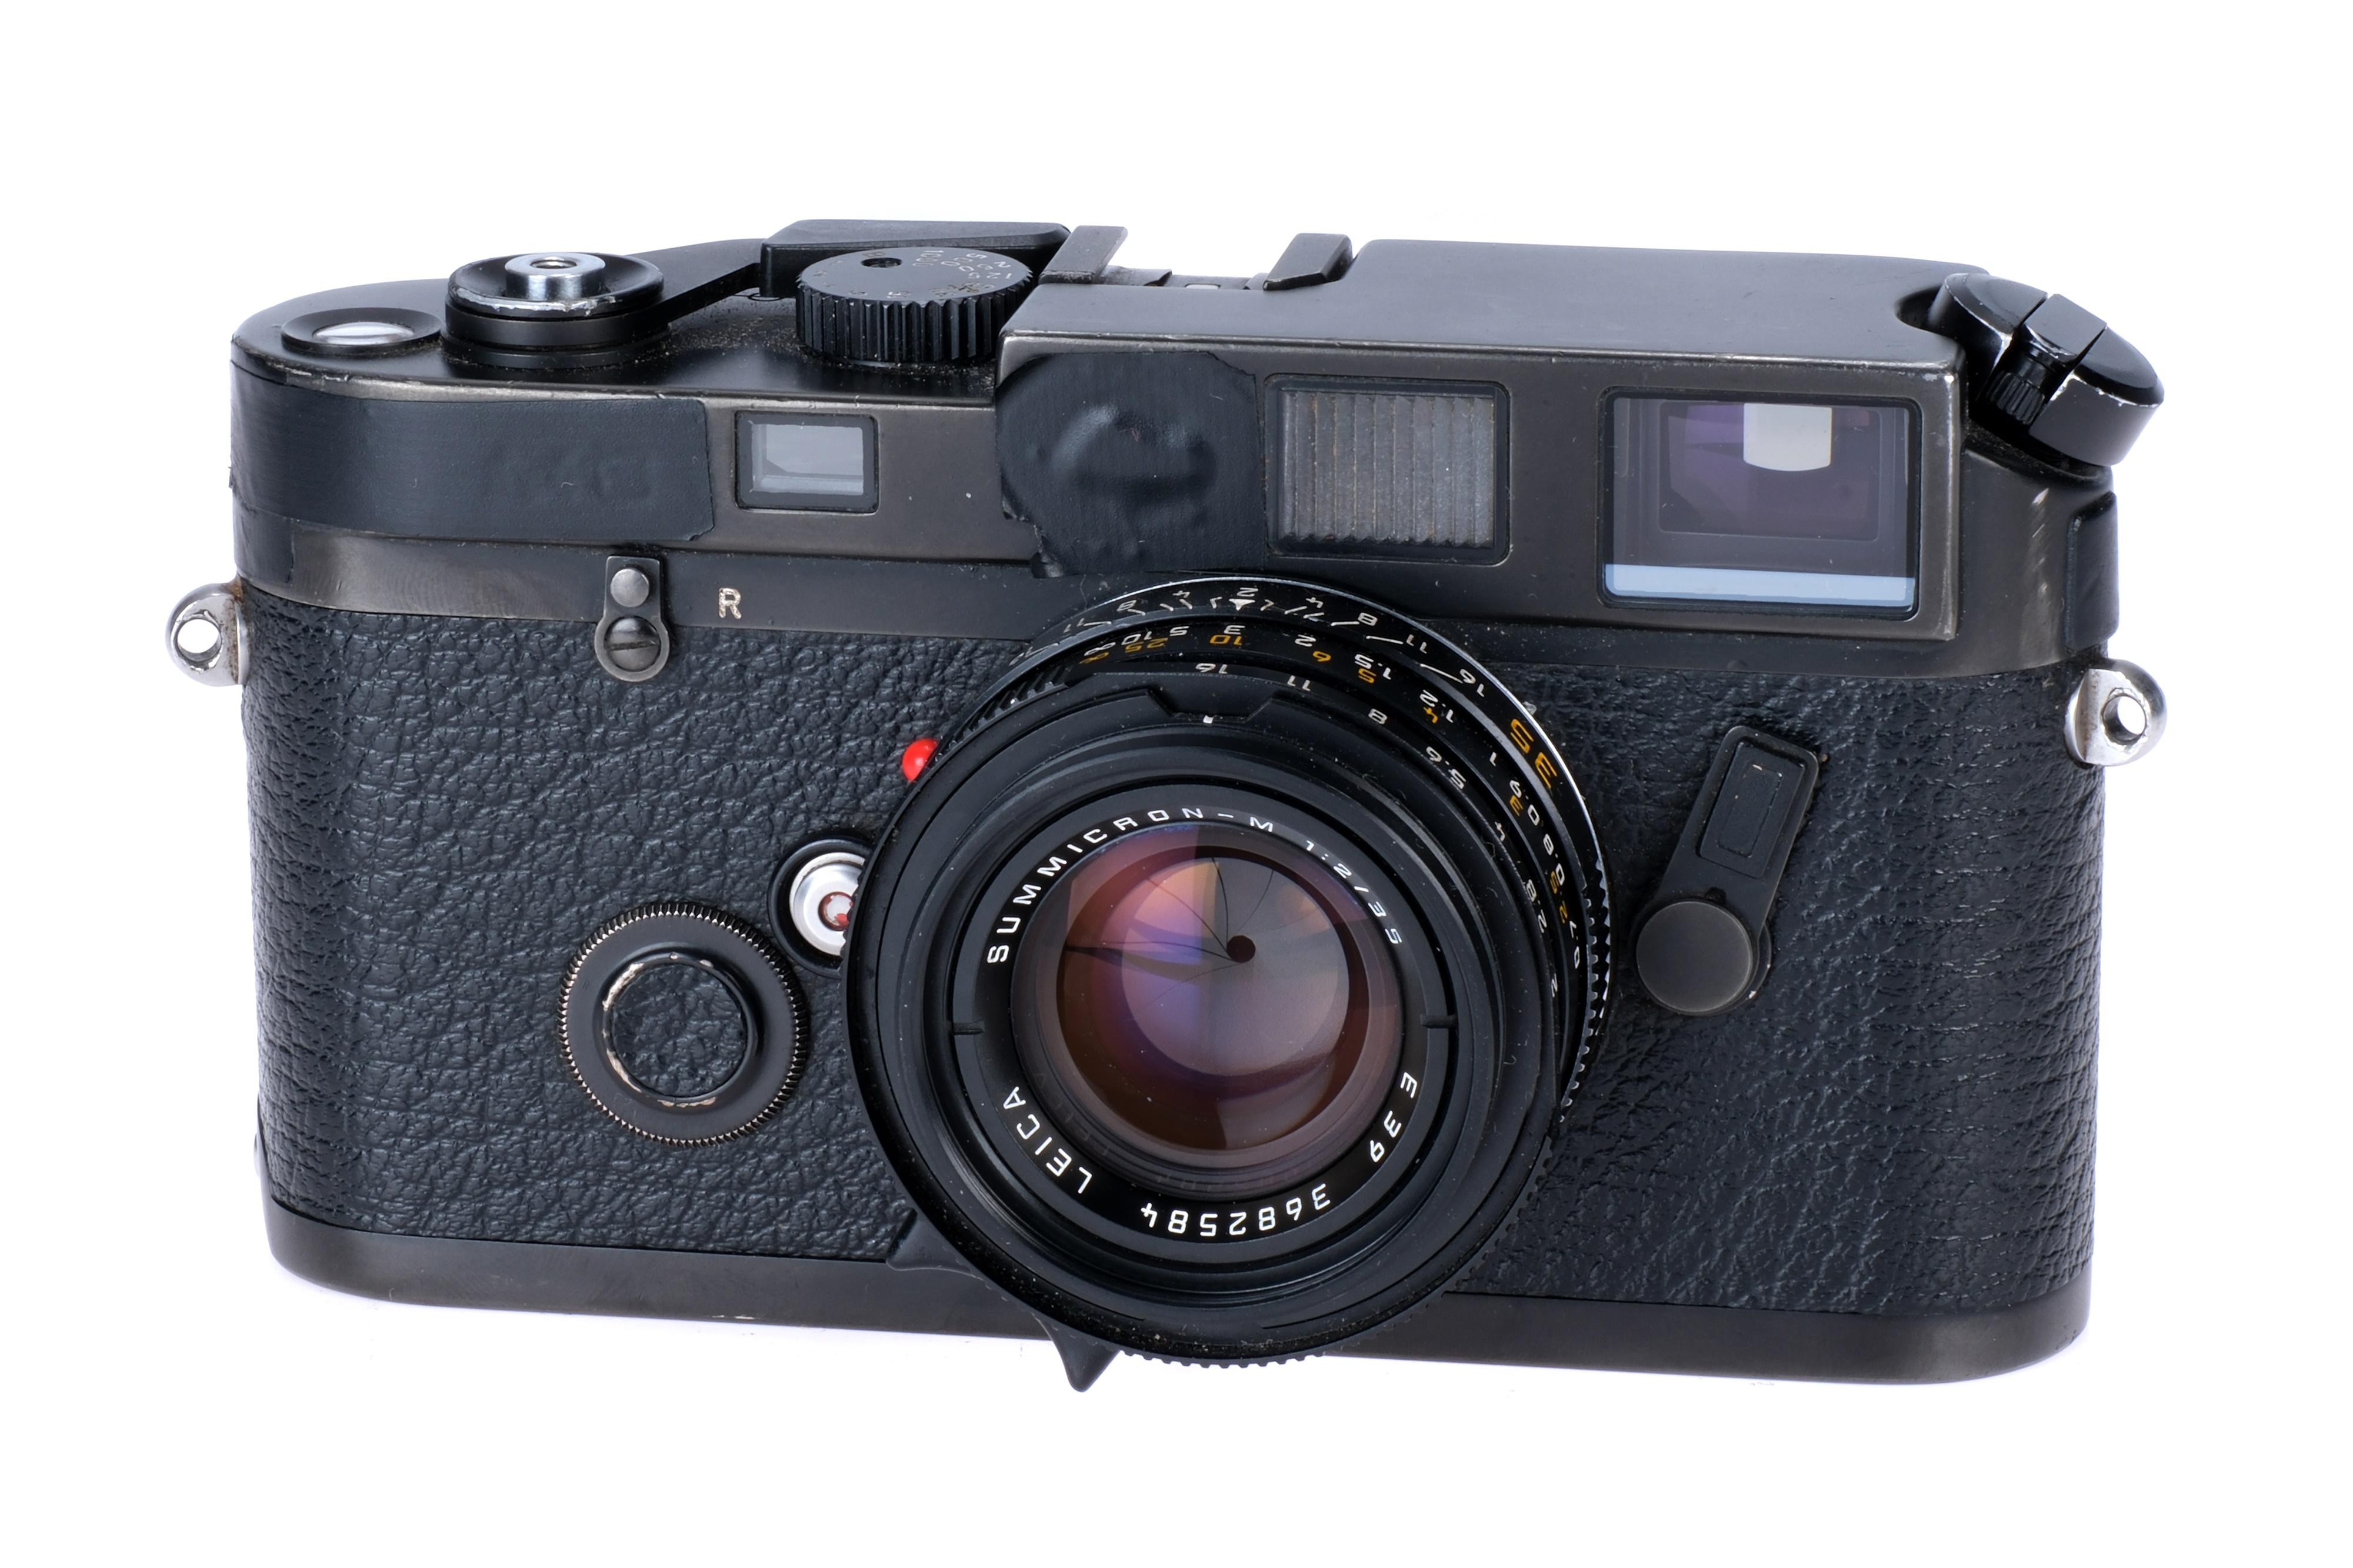 "Peter Turnley" Leica M6 Rangefinder Camera, 1984-1998